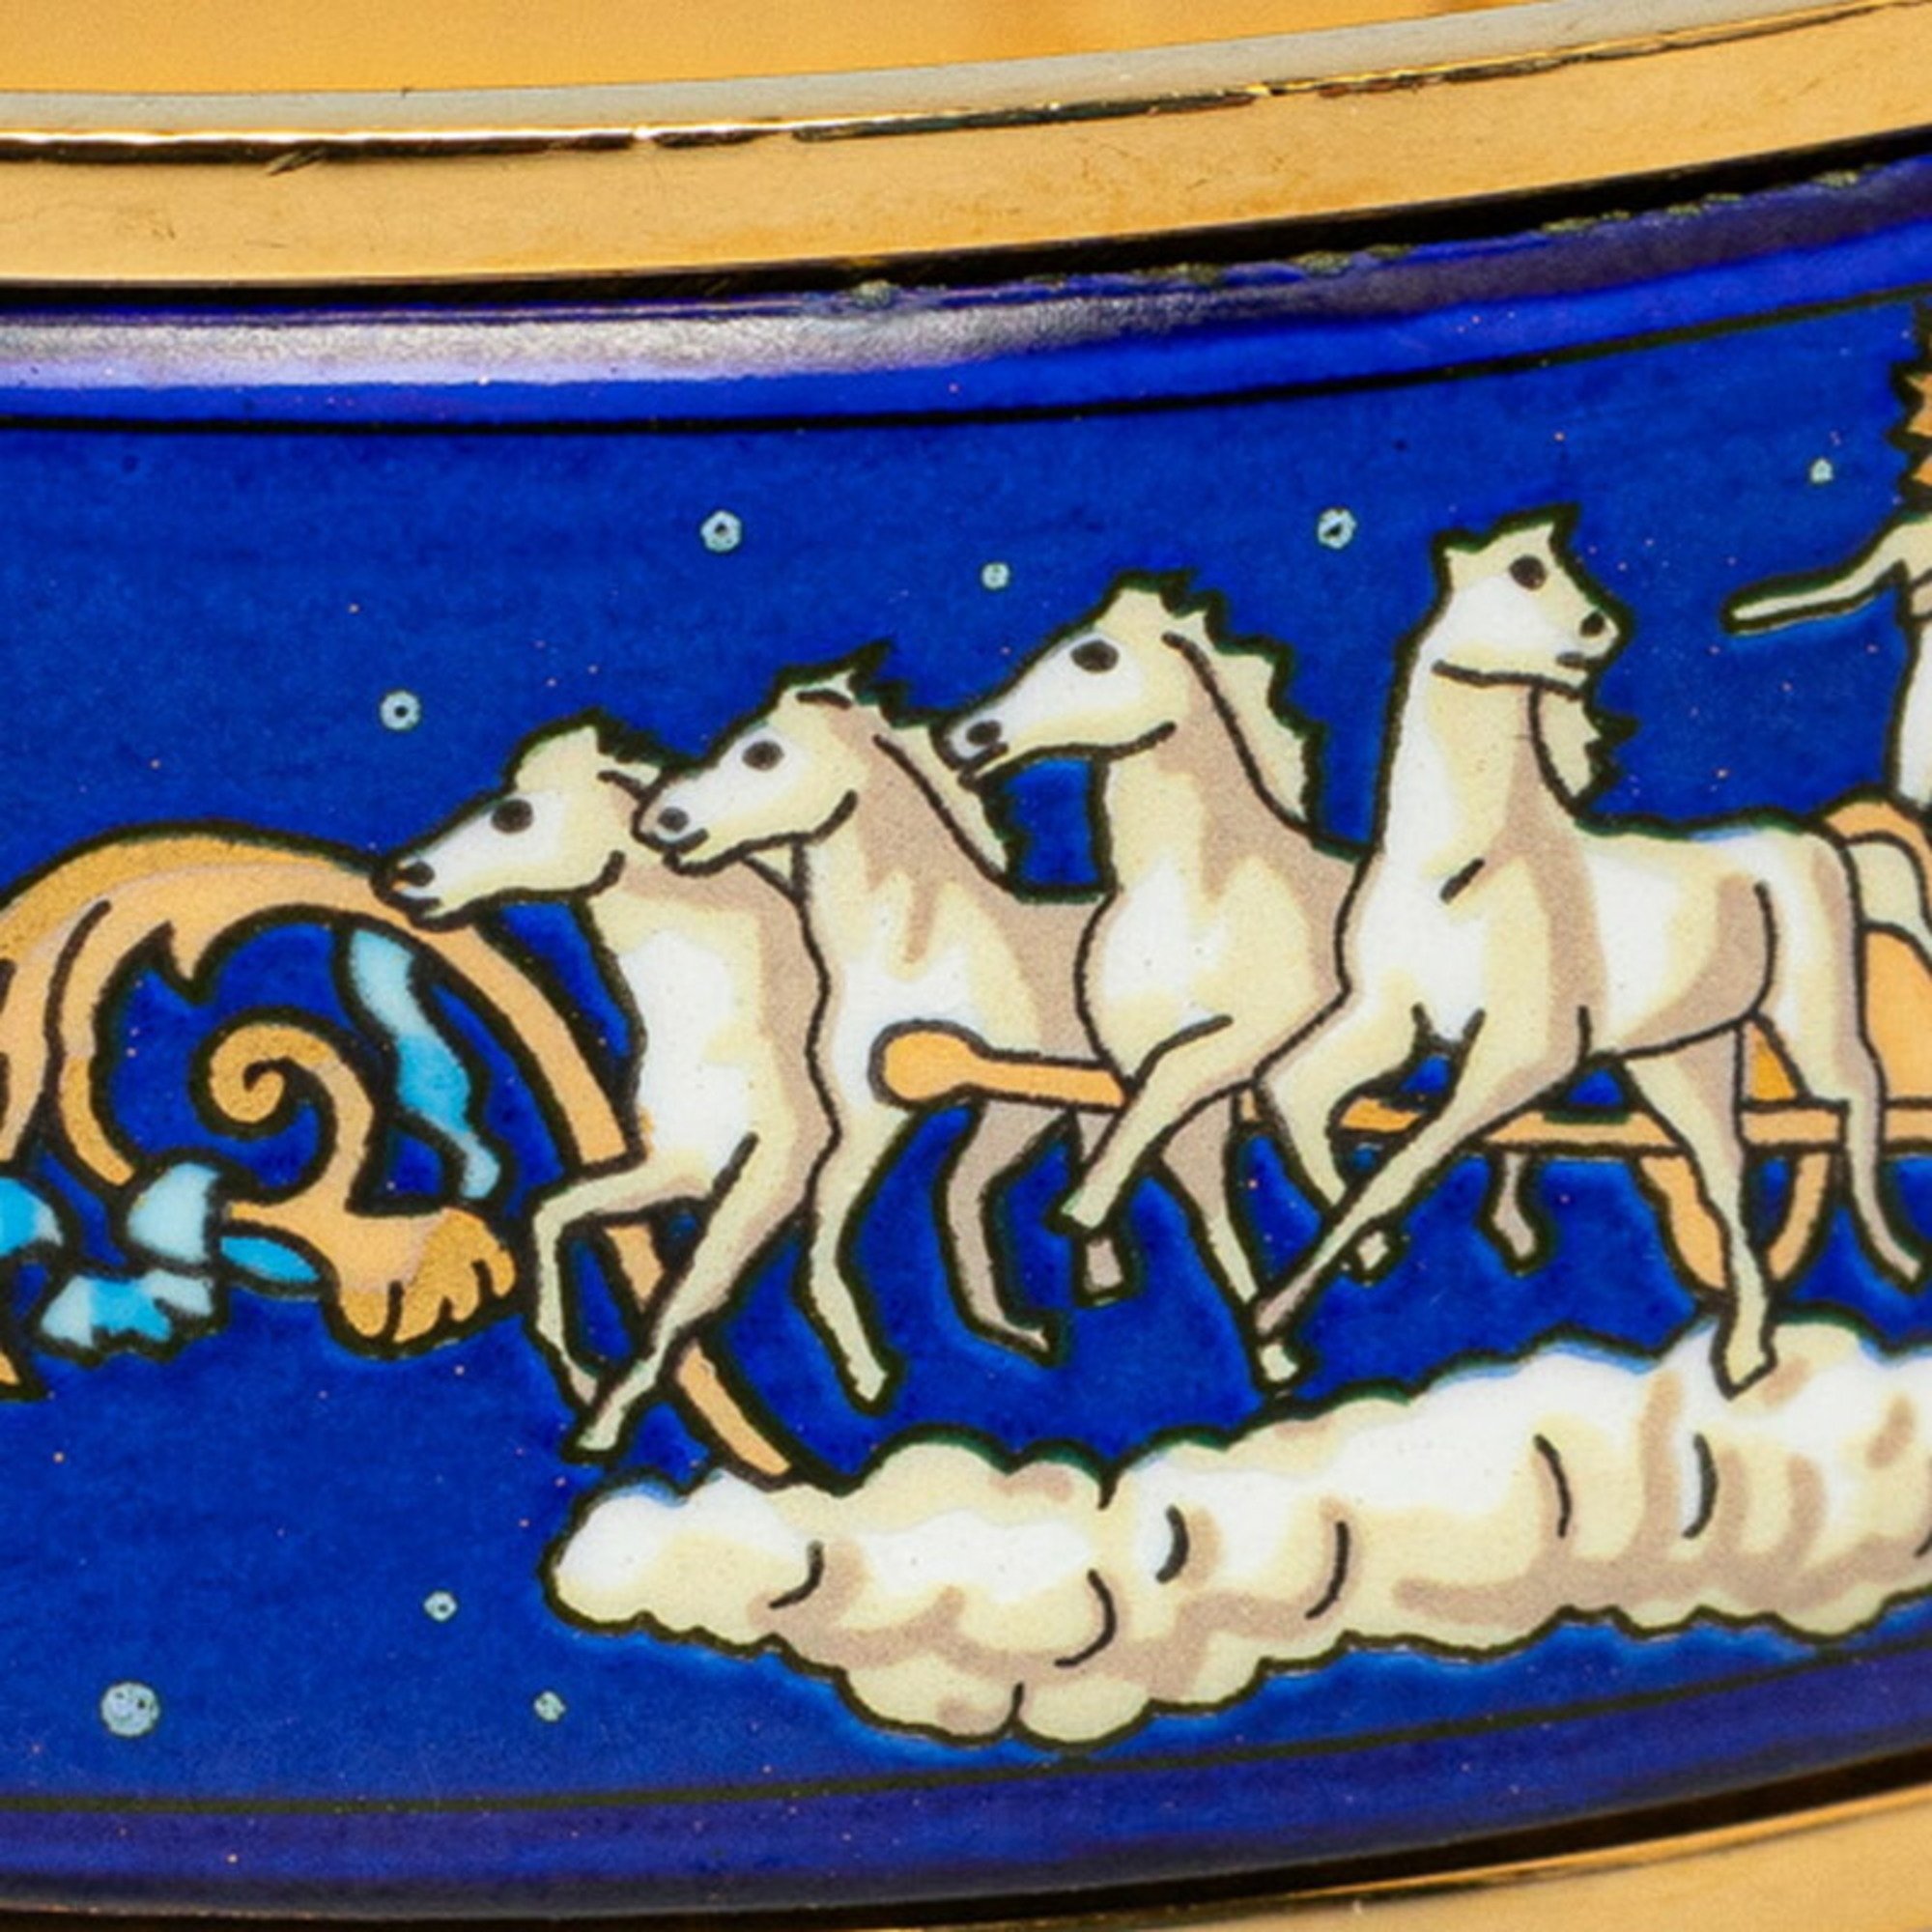 Hermes enamel MM carriage cloisonné bangle bracelet blue gold plated ladies HERMES